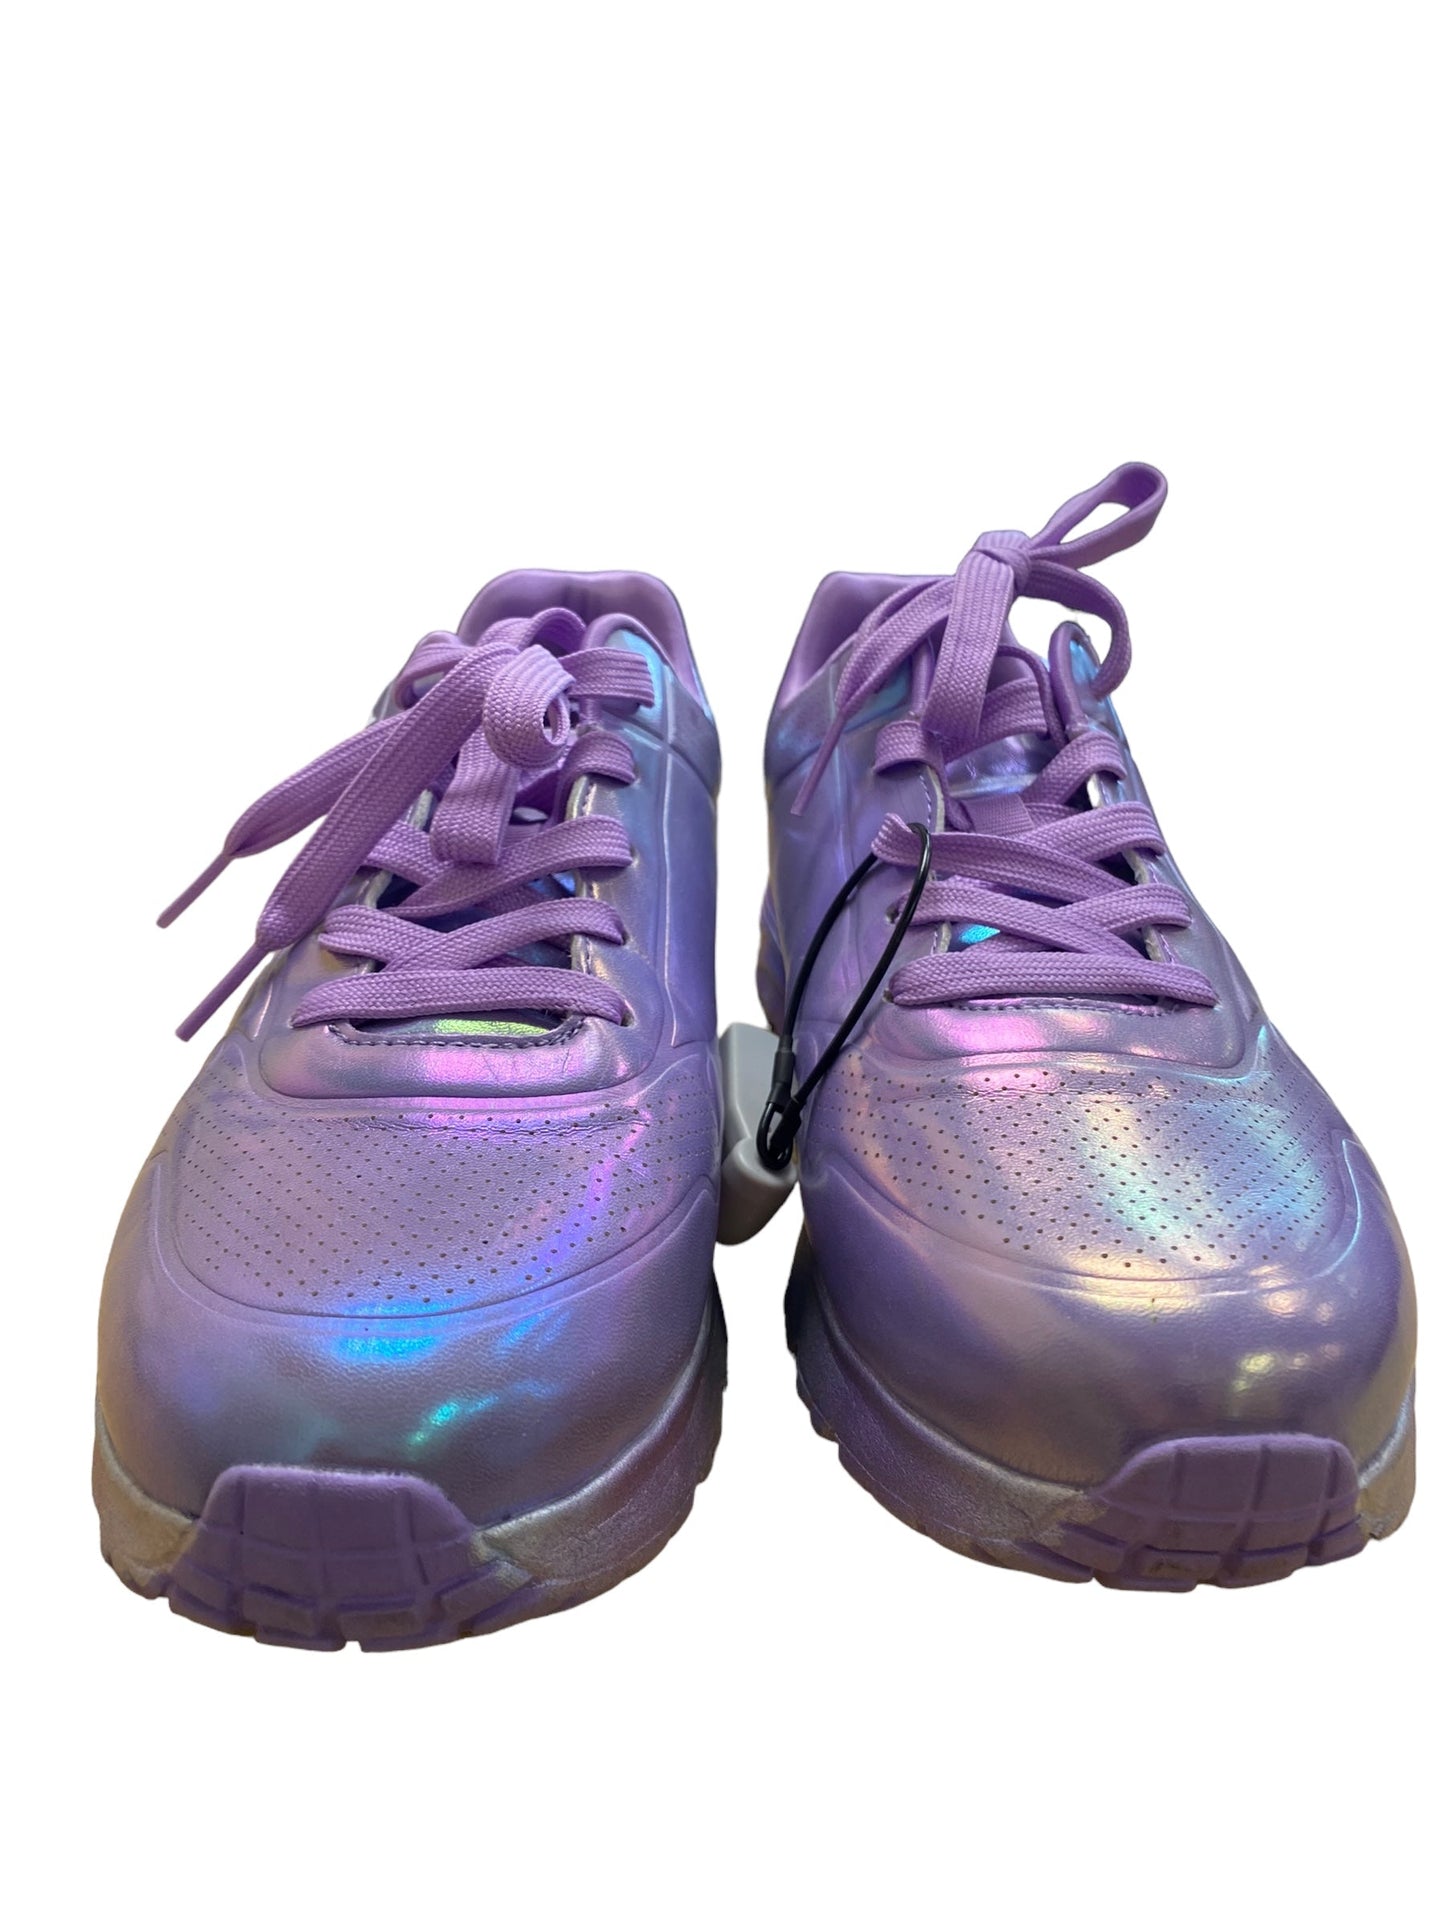 Purple Shoes Athletic Skechers, Size 7